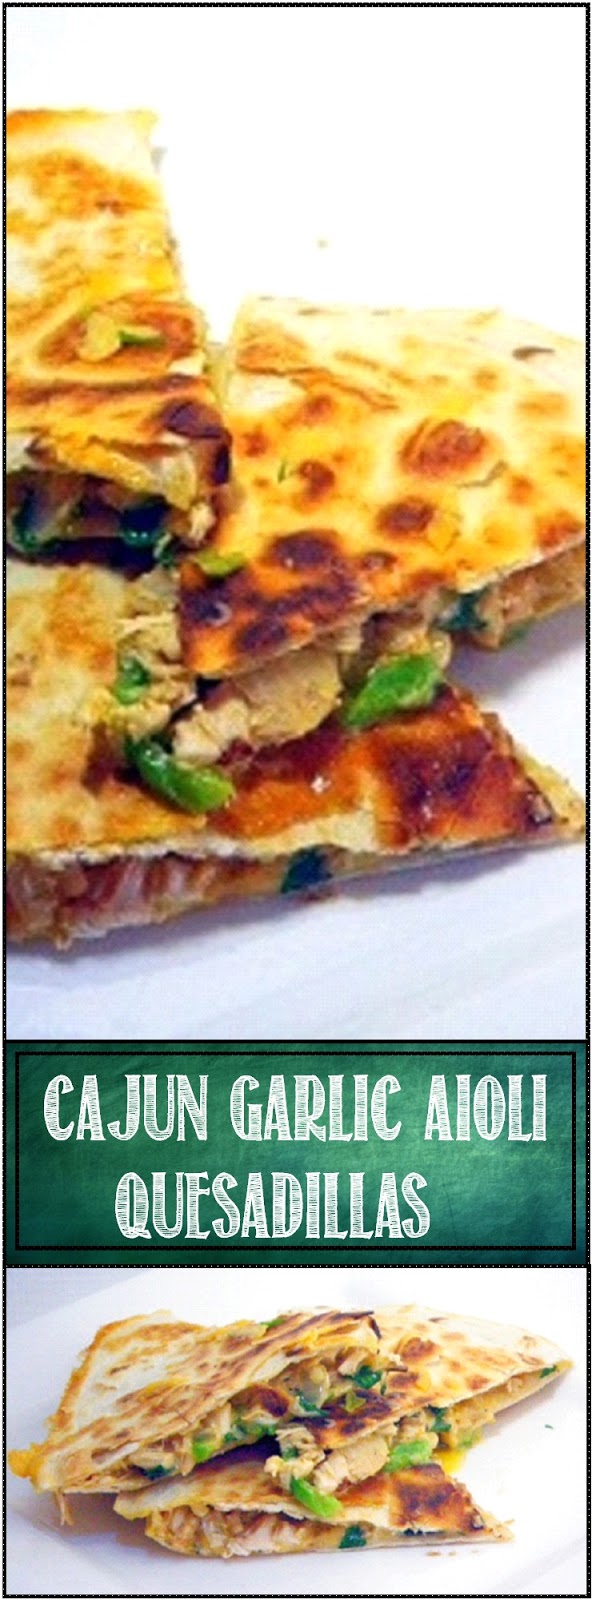 52 Ways to Cook: Cajun Garlic Aioli Quesadilla